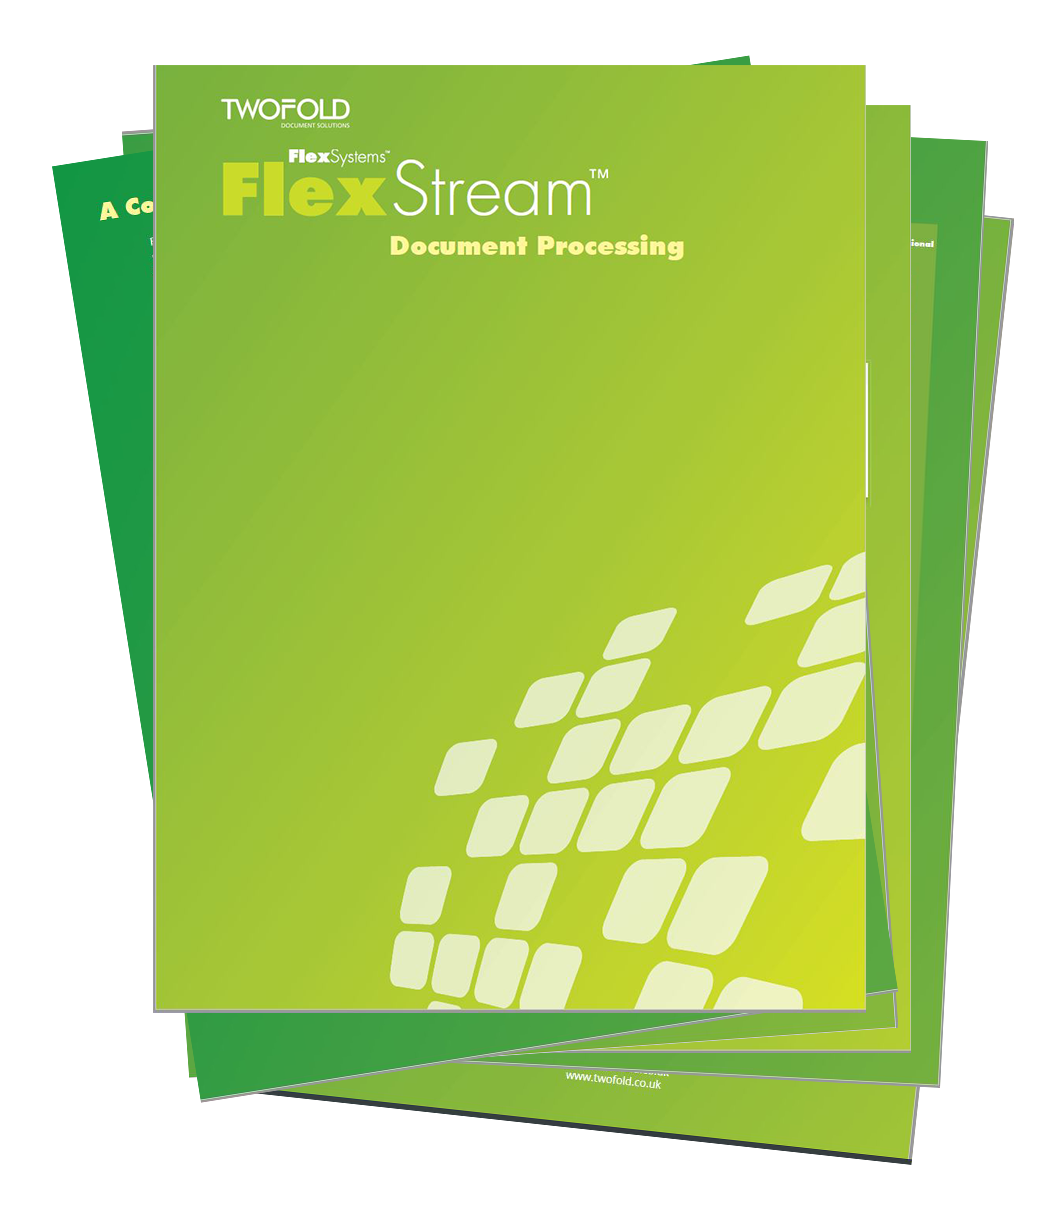 flexstream brochure image